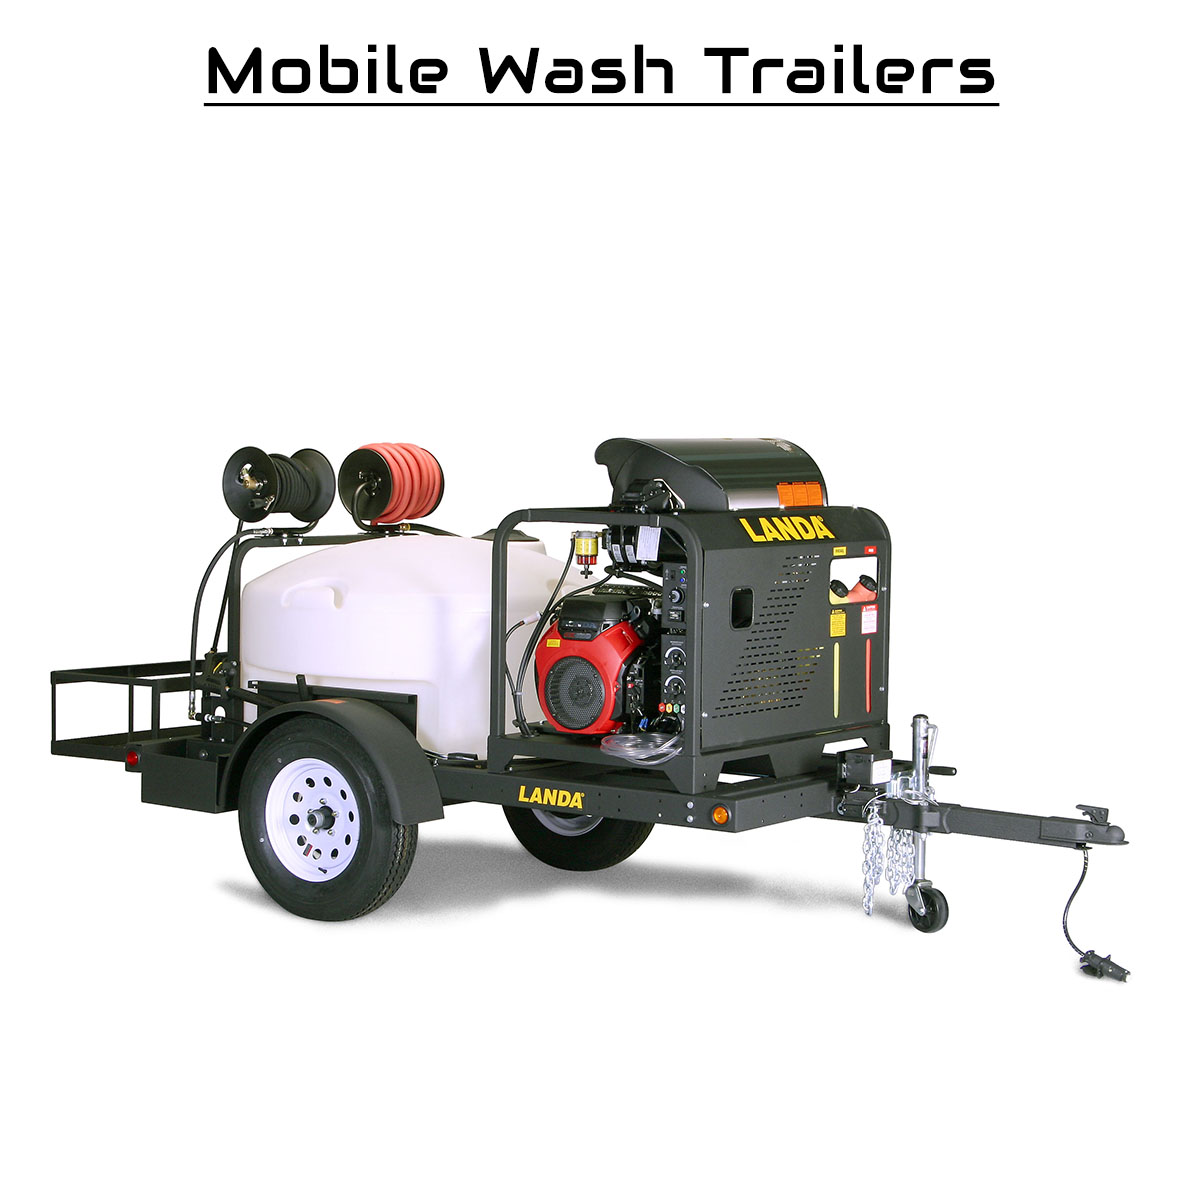 Mobile Wash Trailers